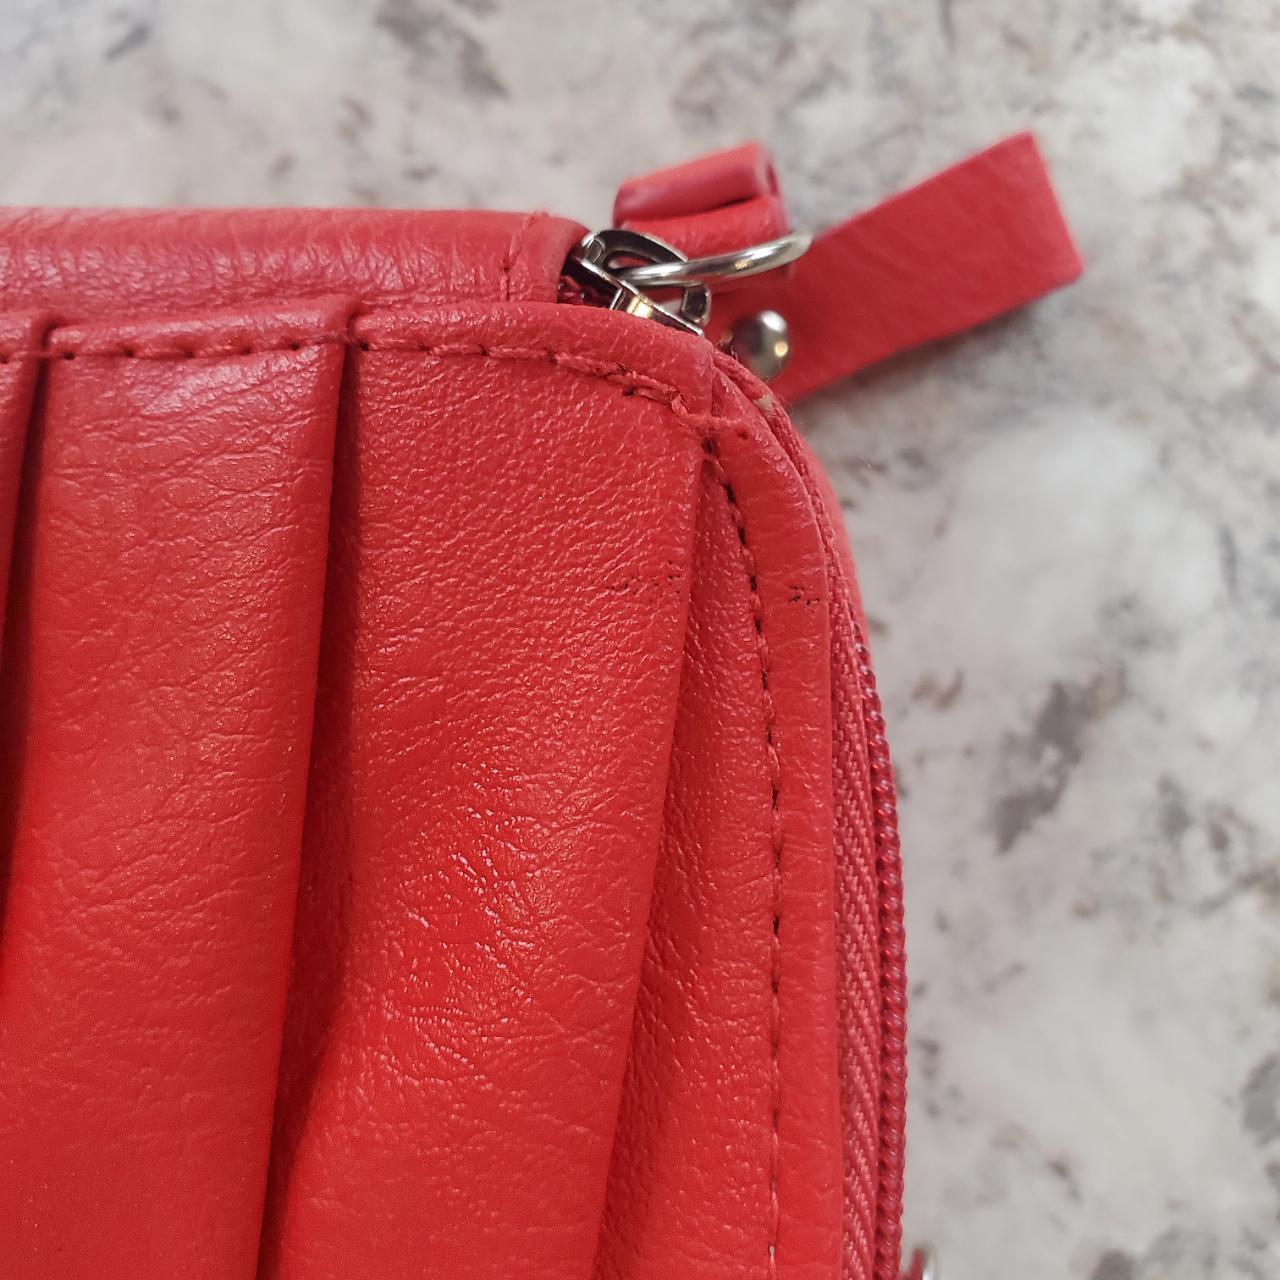 Jessica simpson crossbody bag, Women's Fashion, Bags & Wallets